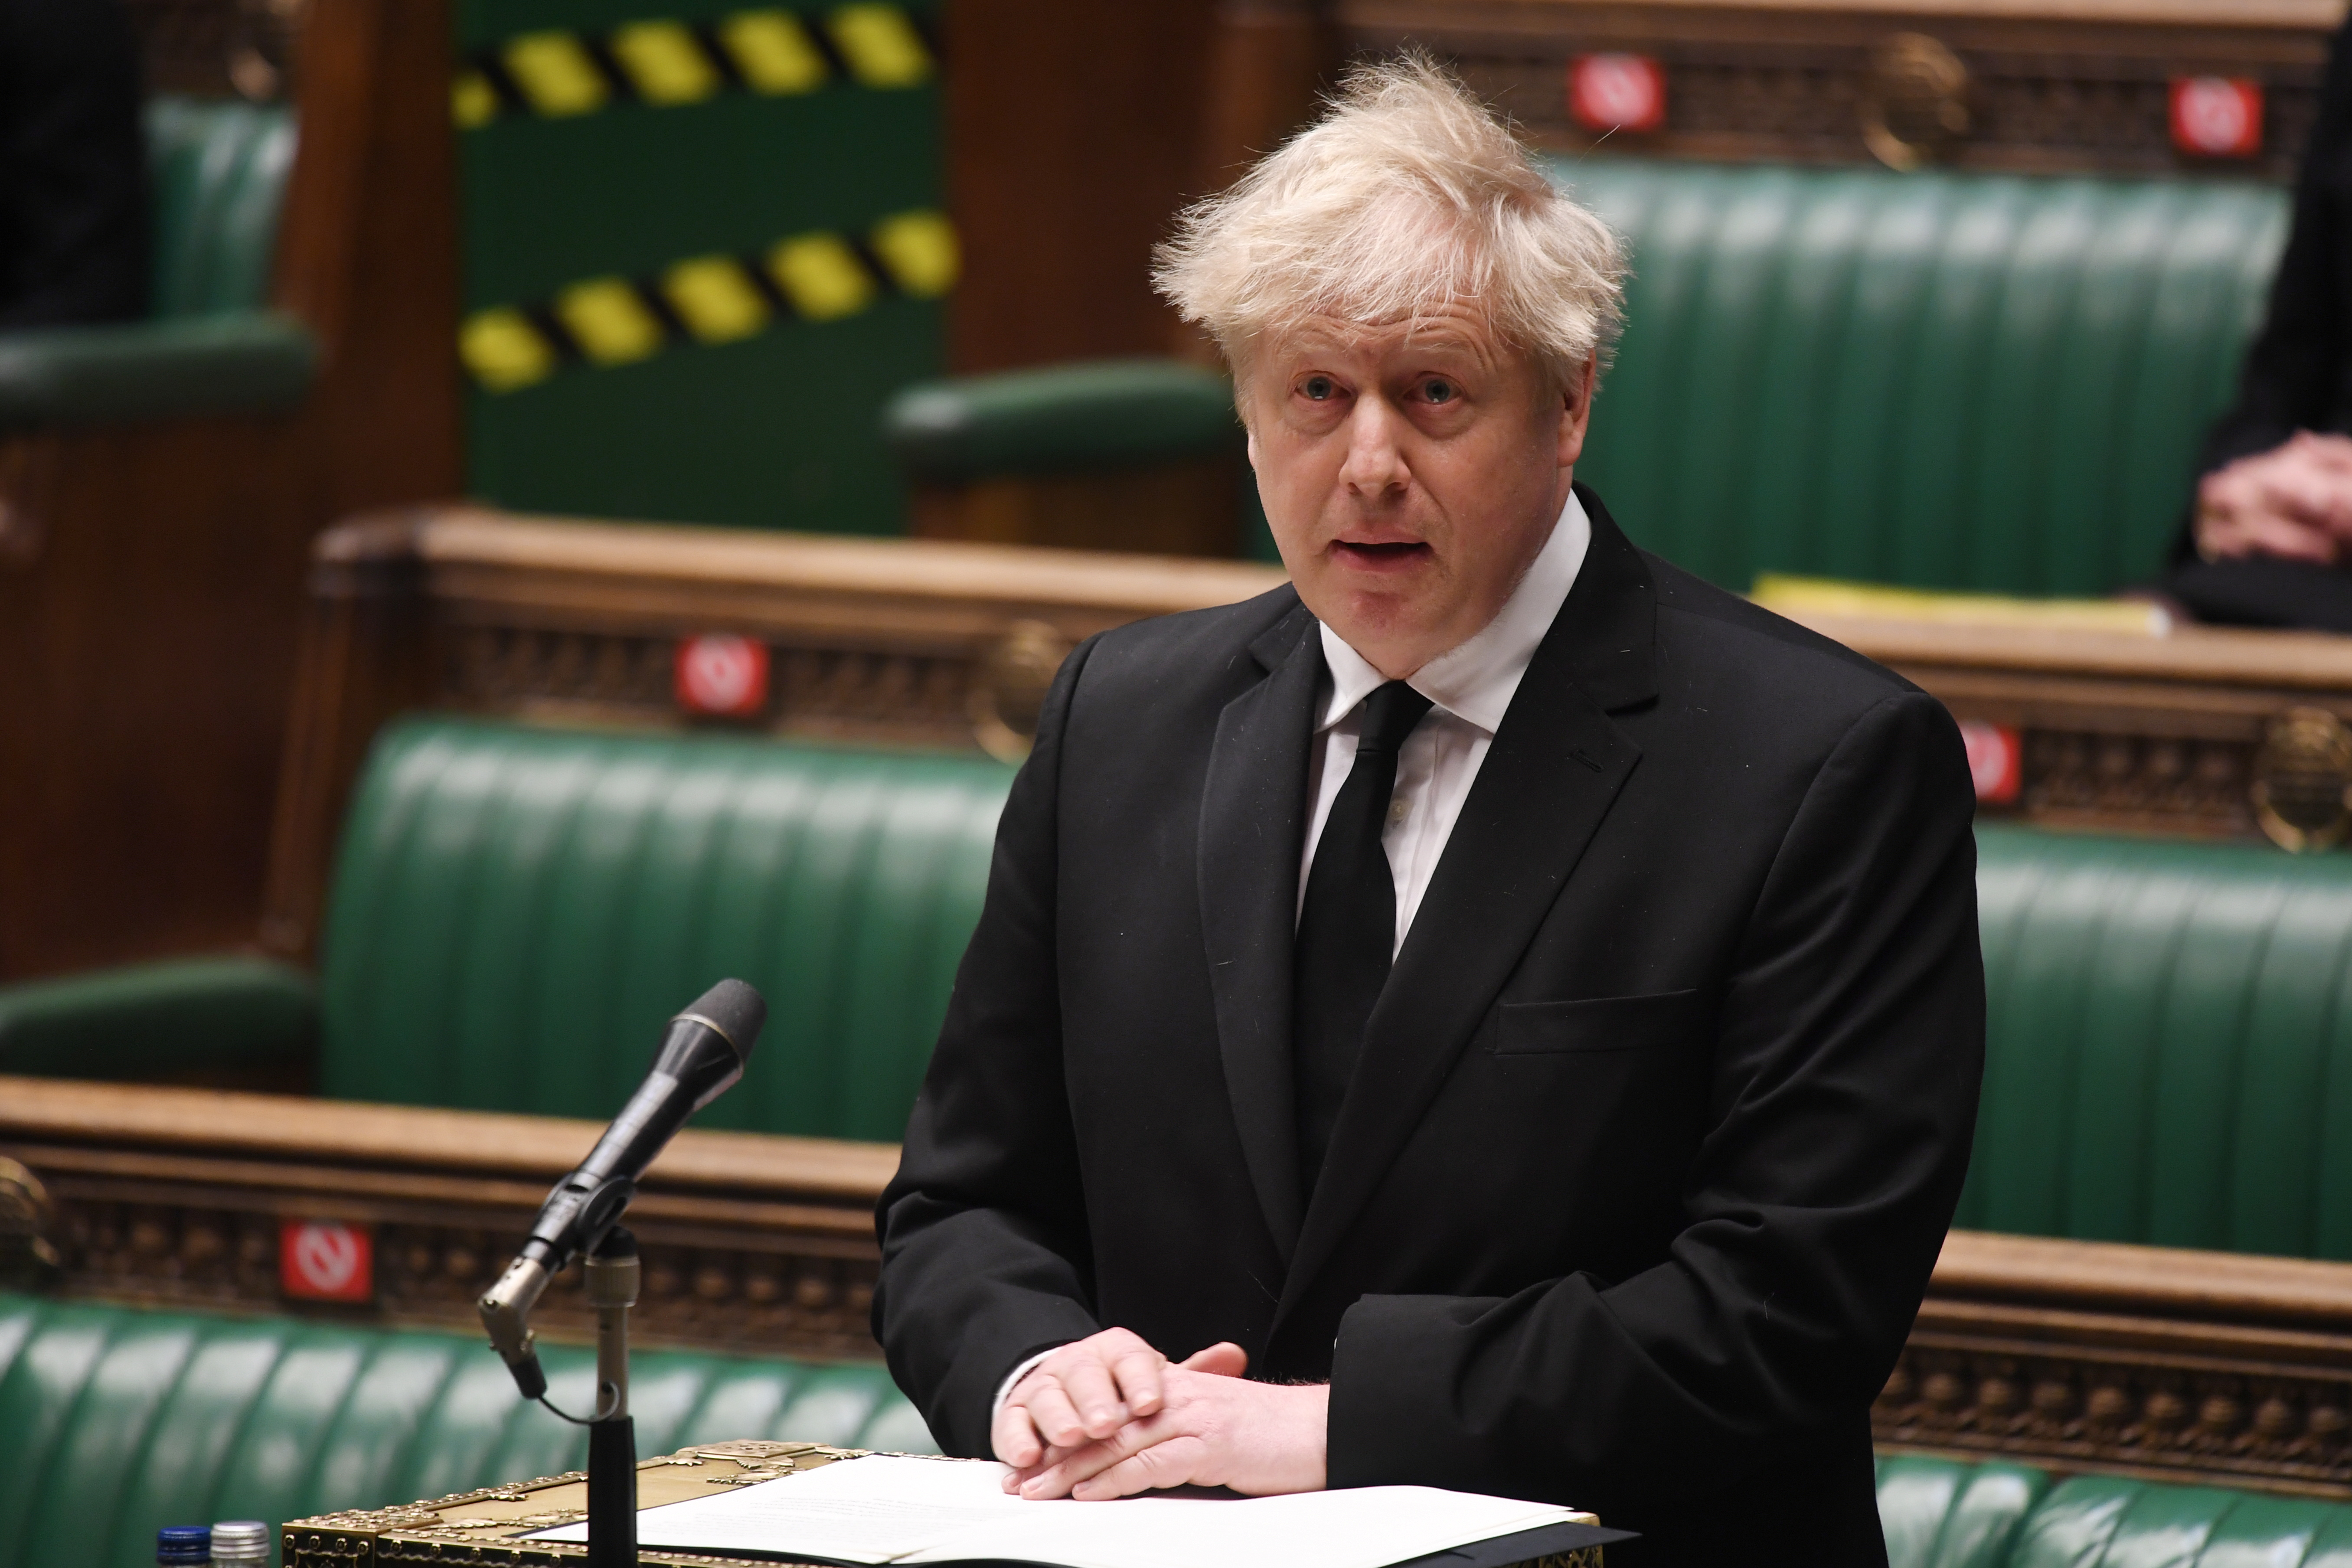 Britain's Prime Minister Boris Johnson speaks during a tribute to HRH Prince Philip, Duke of Edinburgh in London